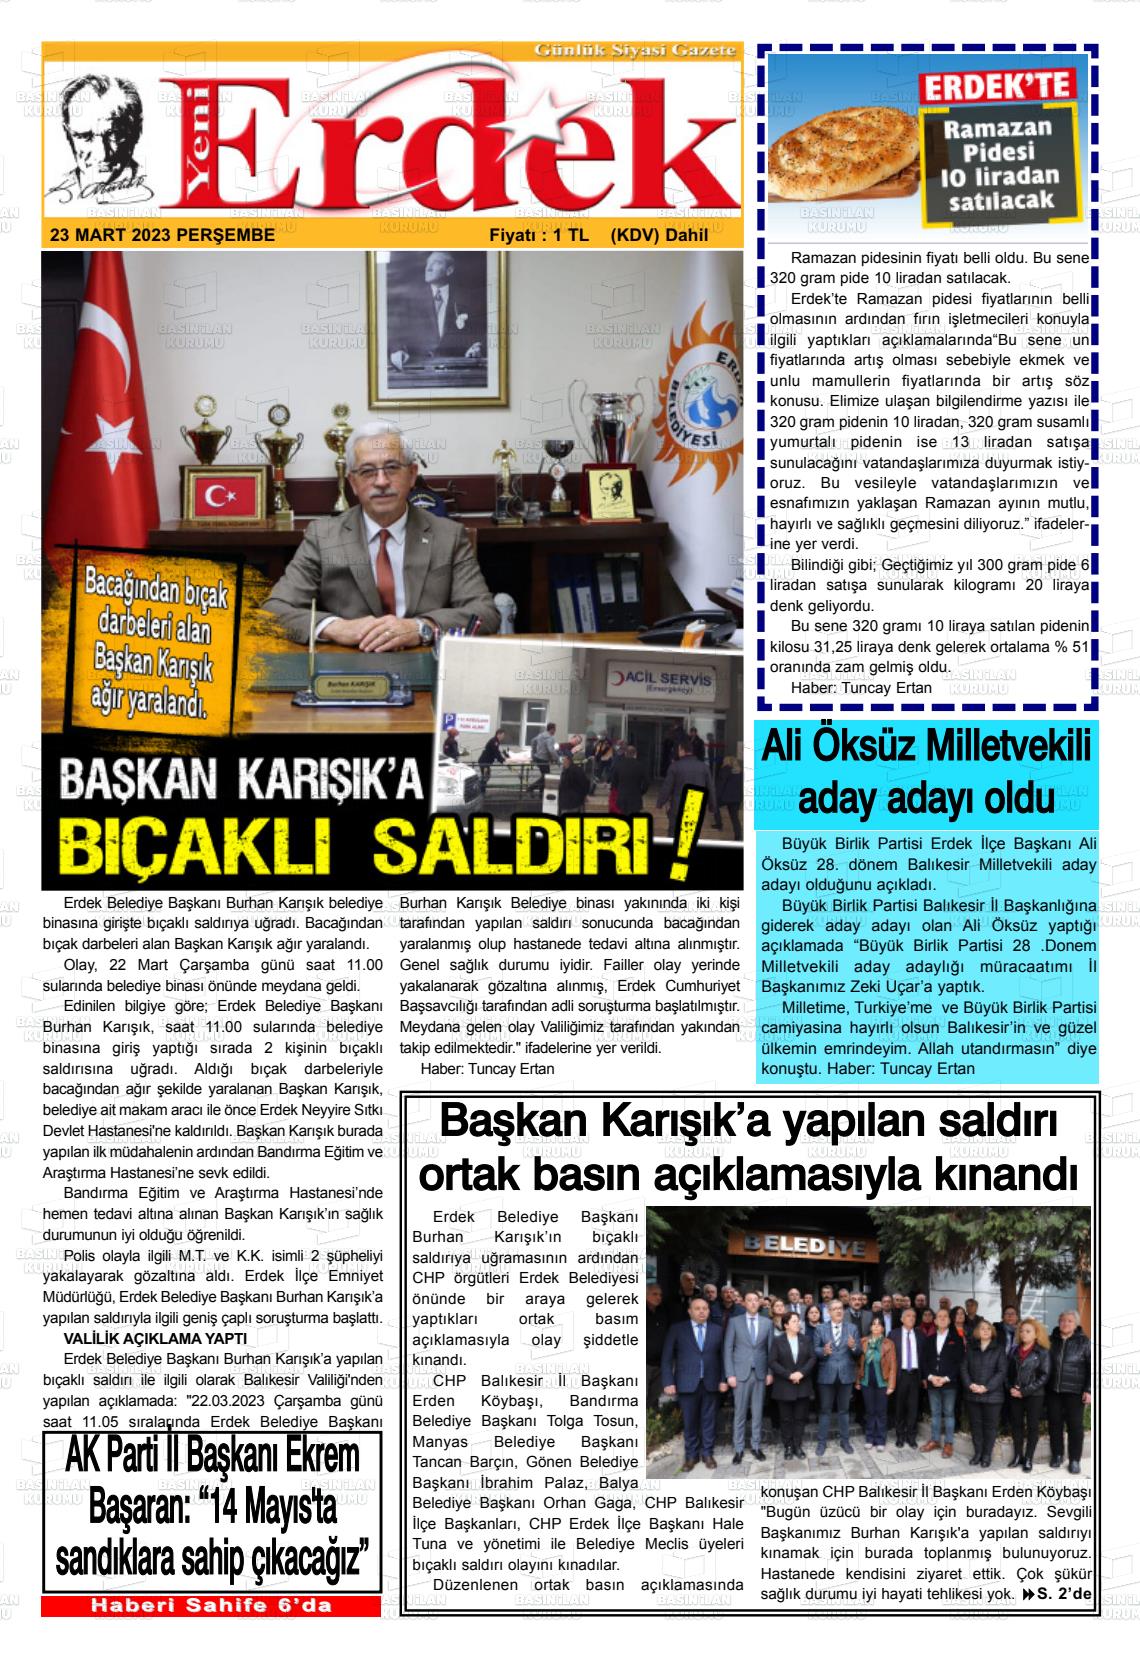 23 Mart 2023 Yeni Erdek Gazete Manşeti